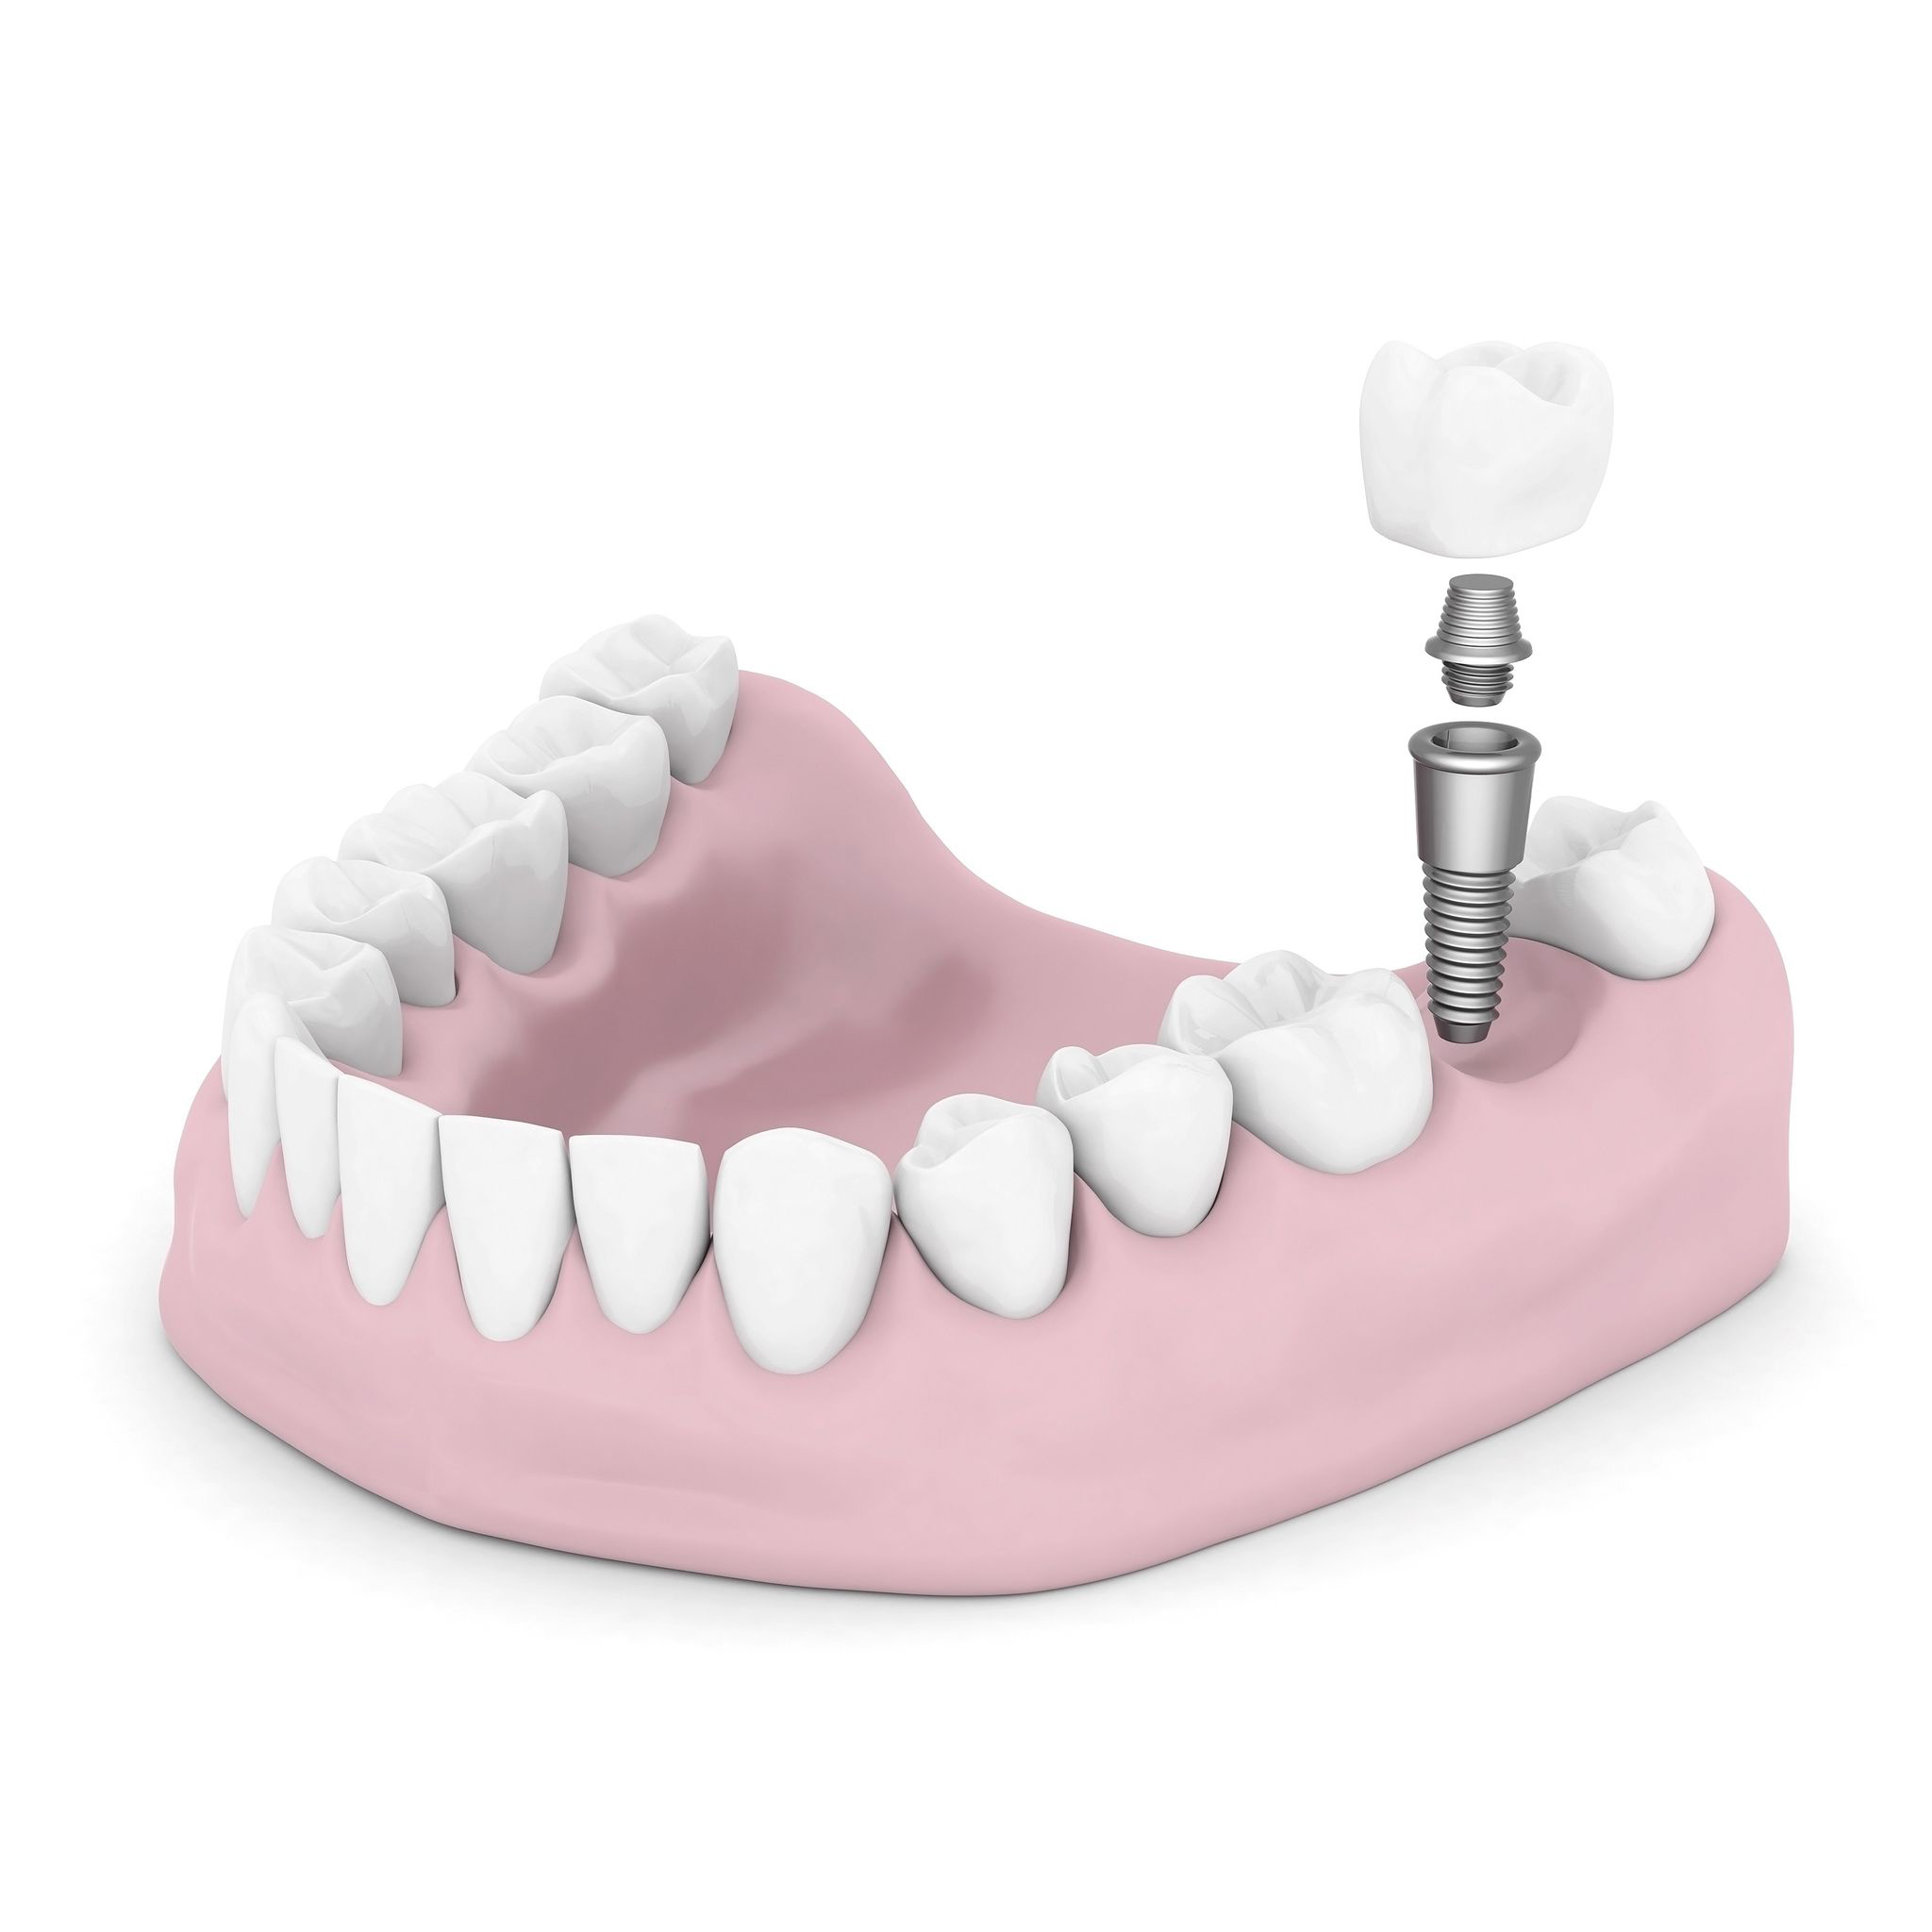 Where can I get San Mateo Dental Implants?